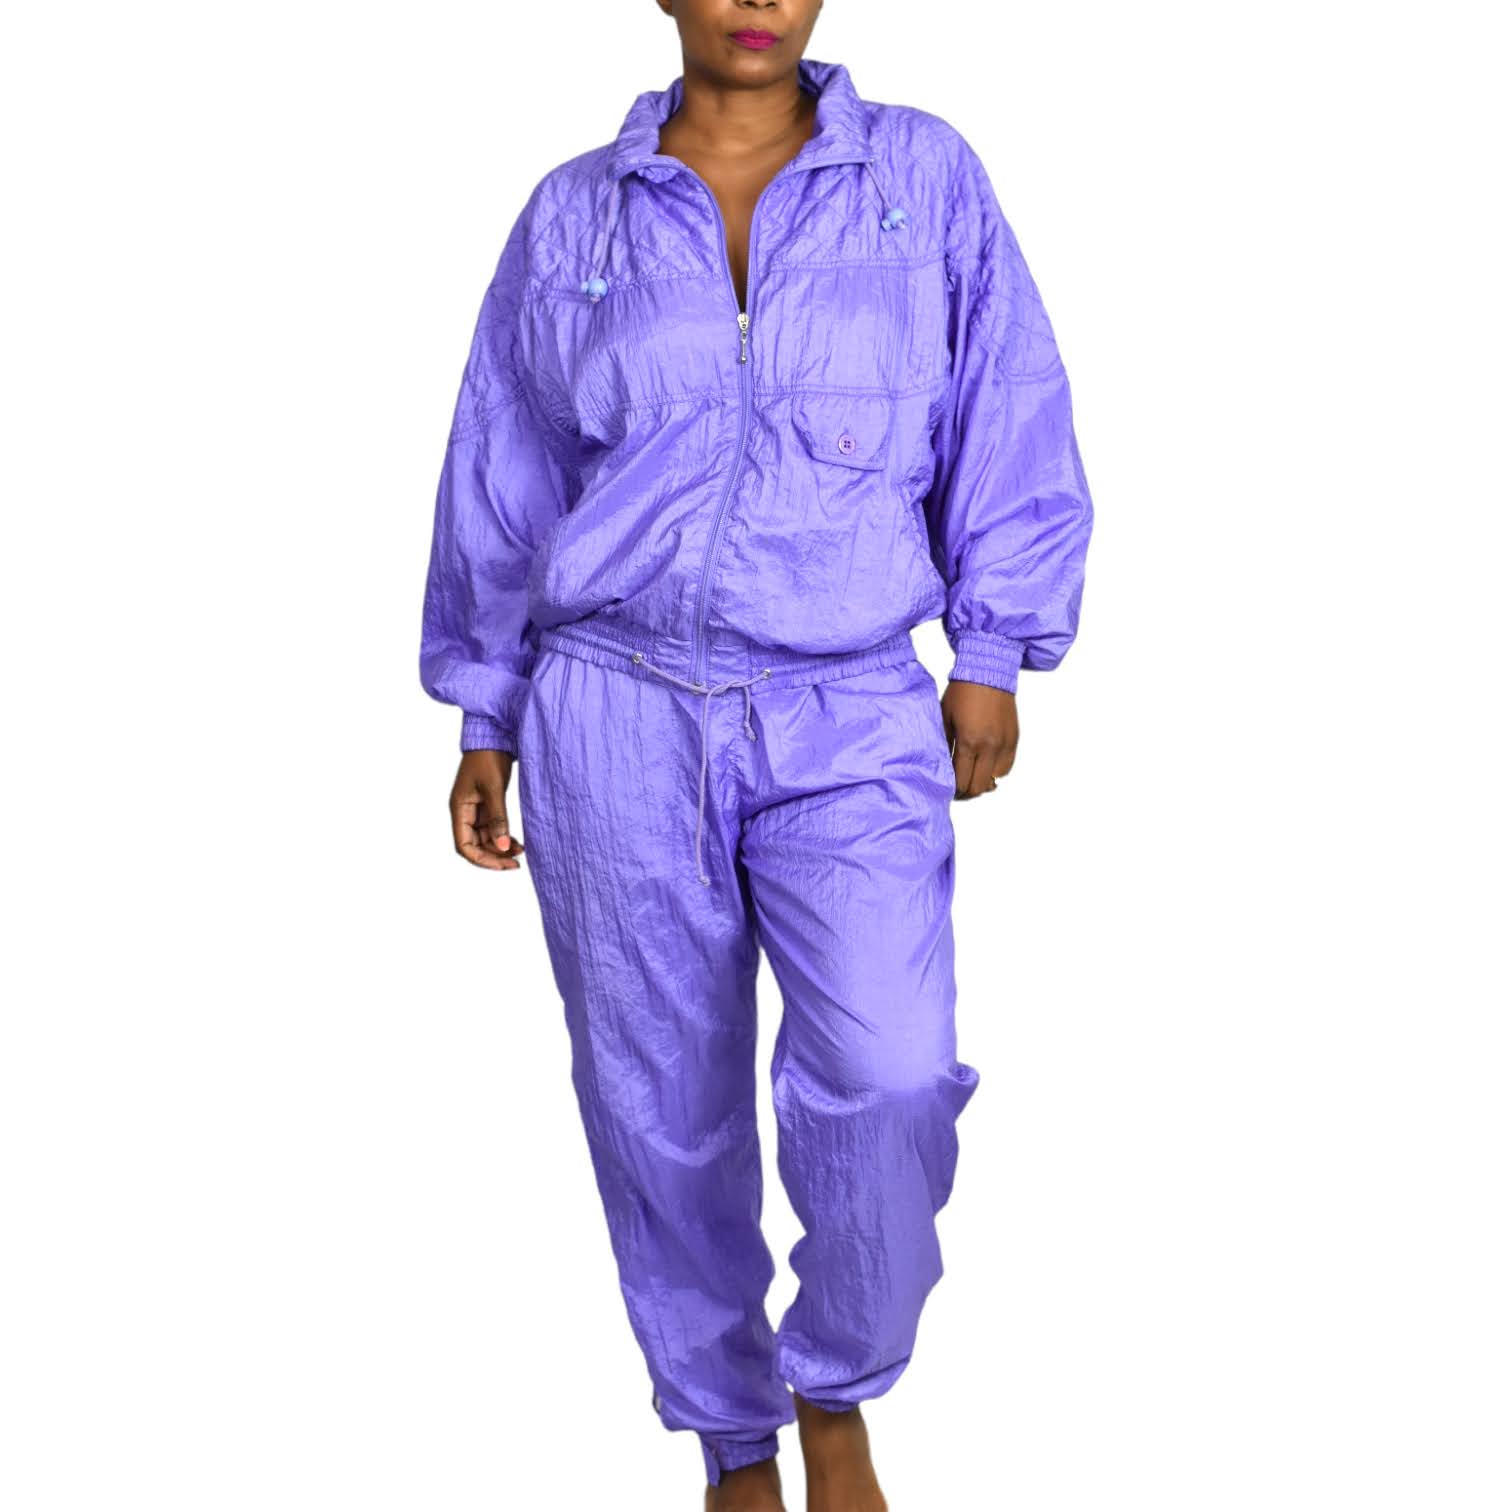 Vintage Nylon Track Suit CoOrd Pastel Purple Lilac Jacket Pant Jogger Set Large